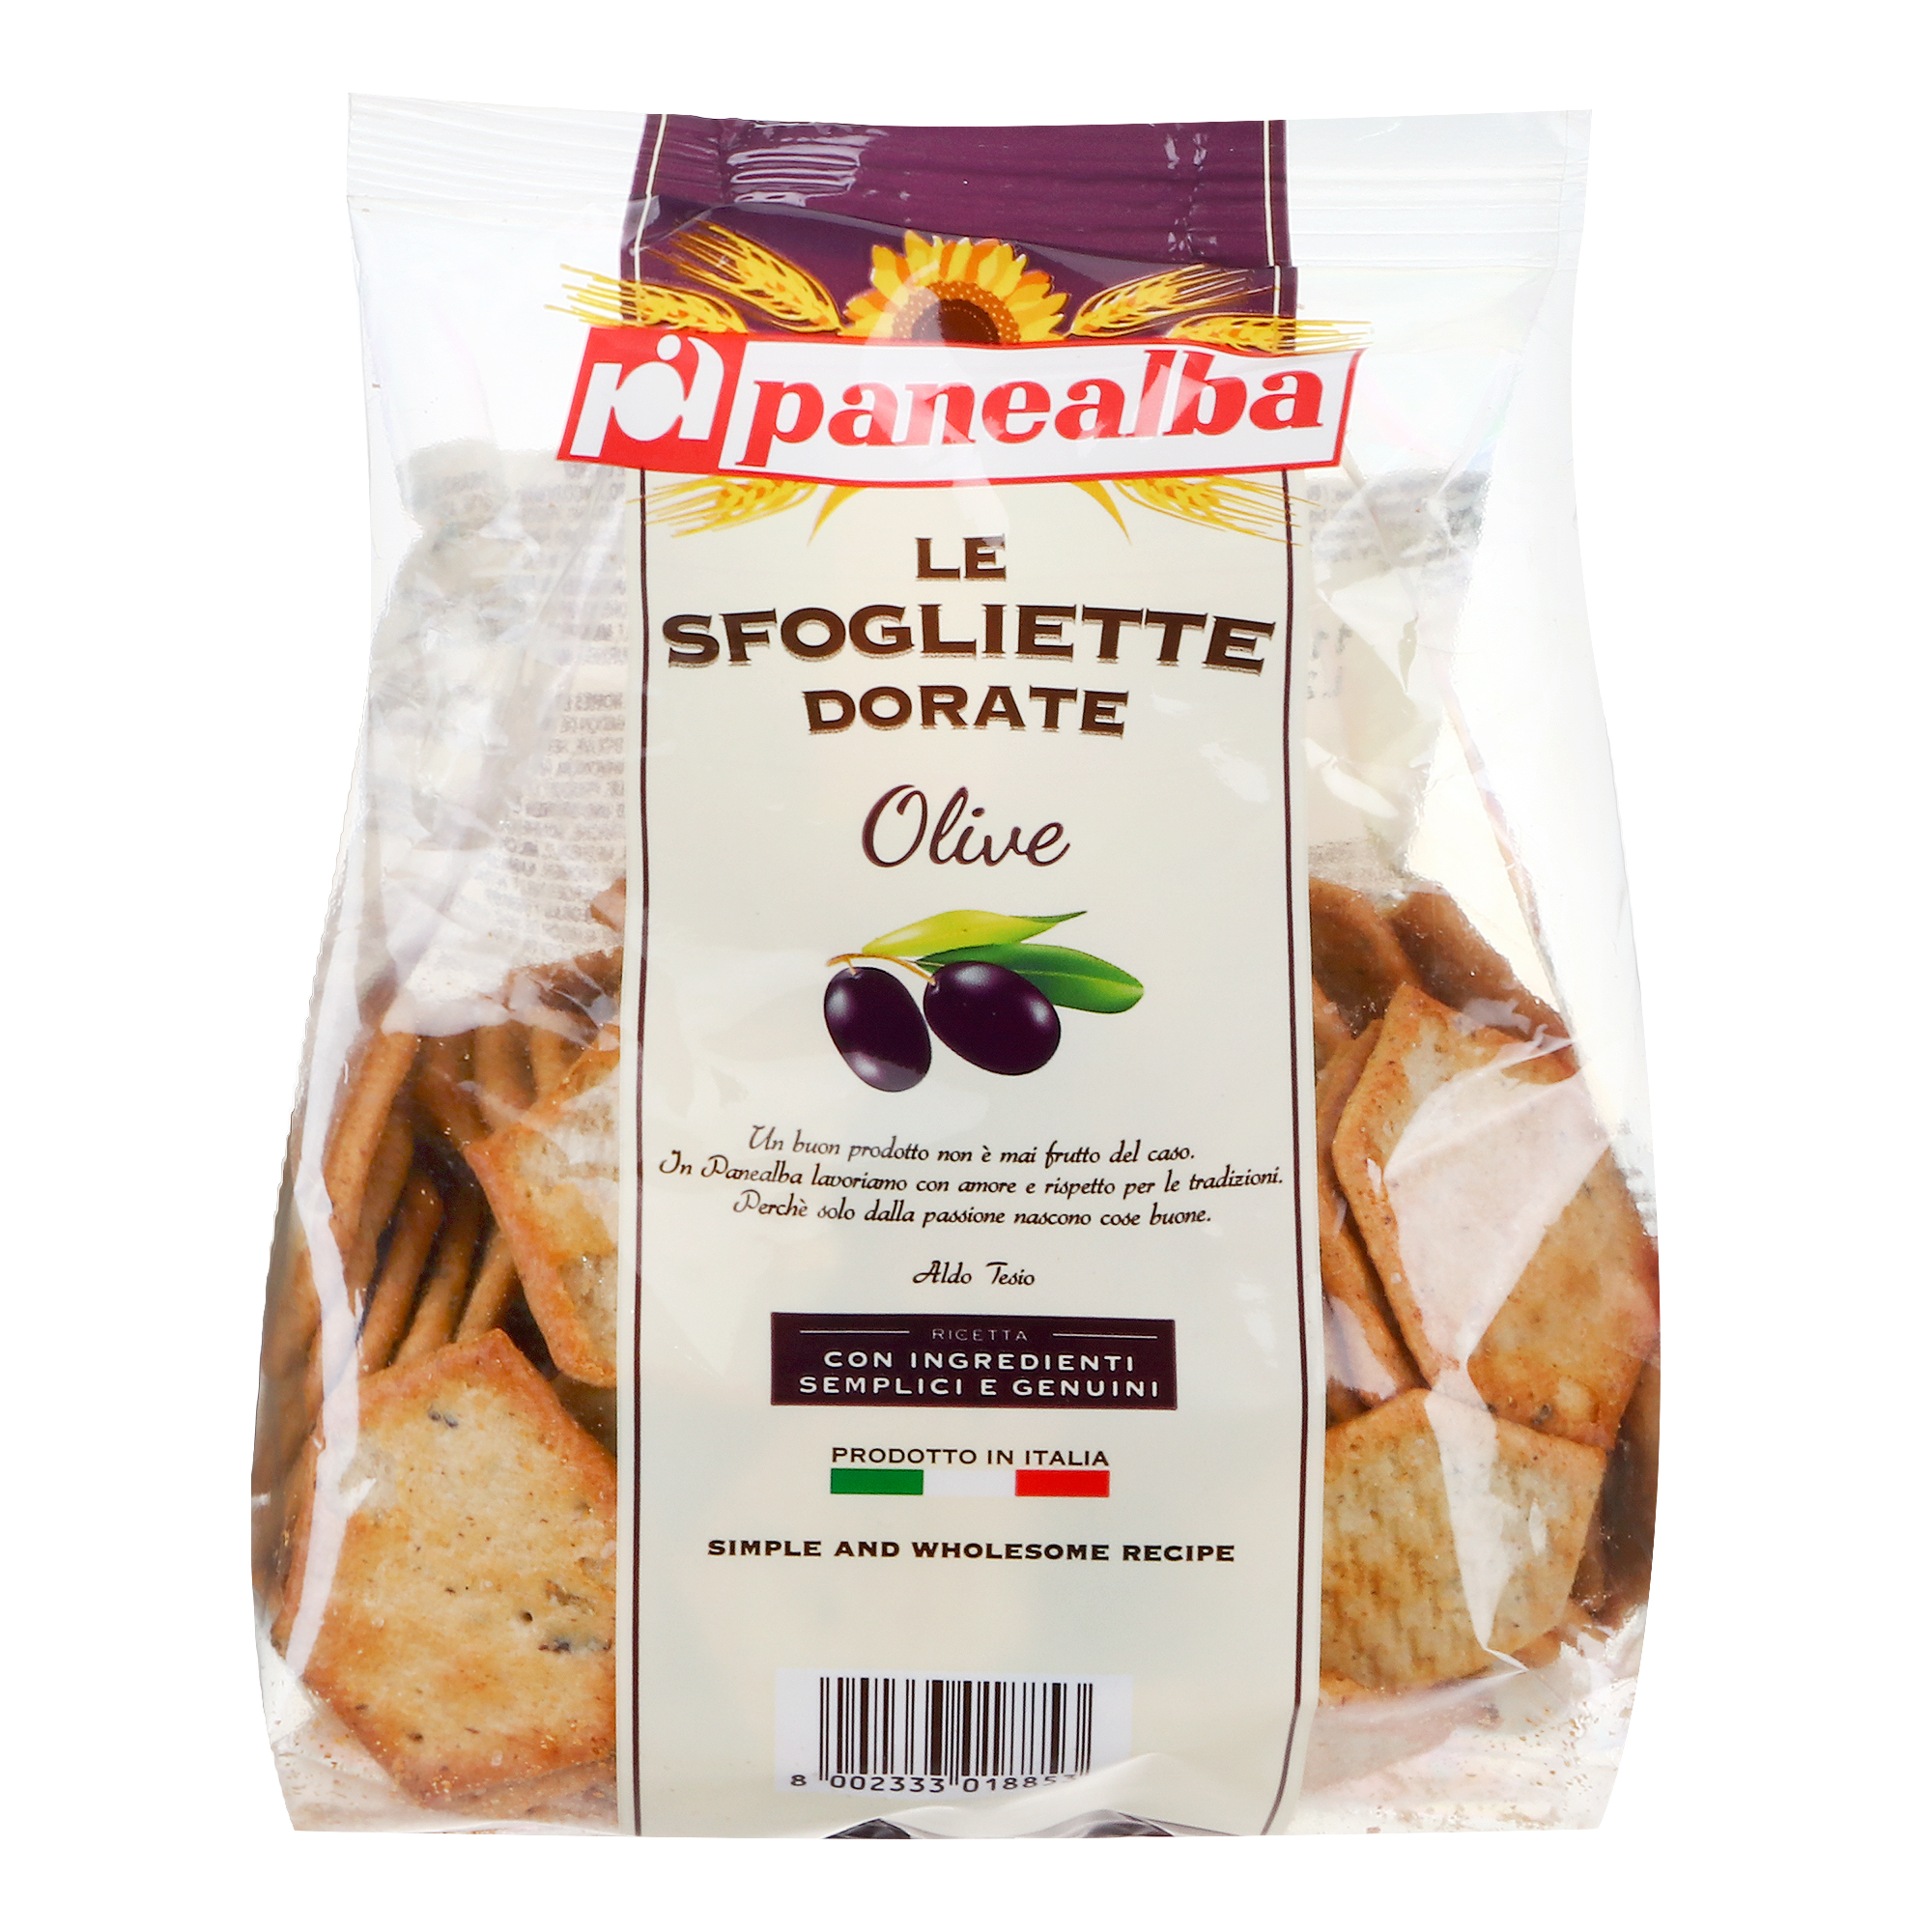 Печенье соленое Panealba с оливками 180 г гриссини panealba spaccatini rosmarino 150 г